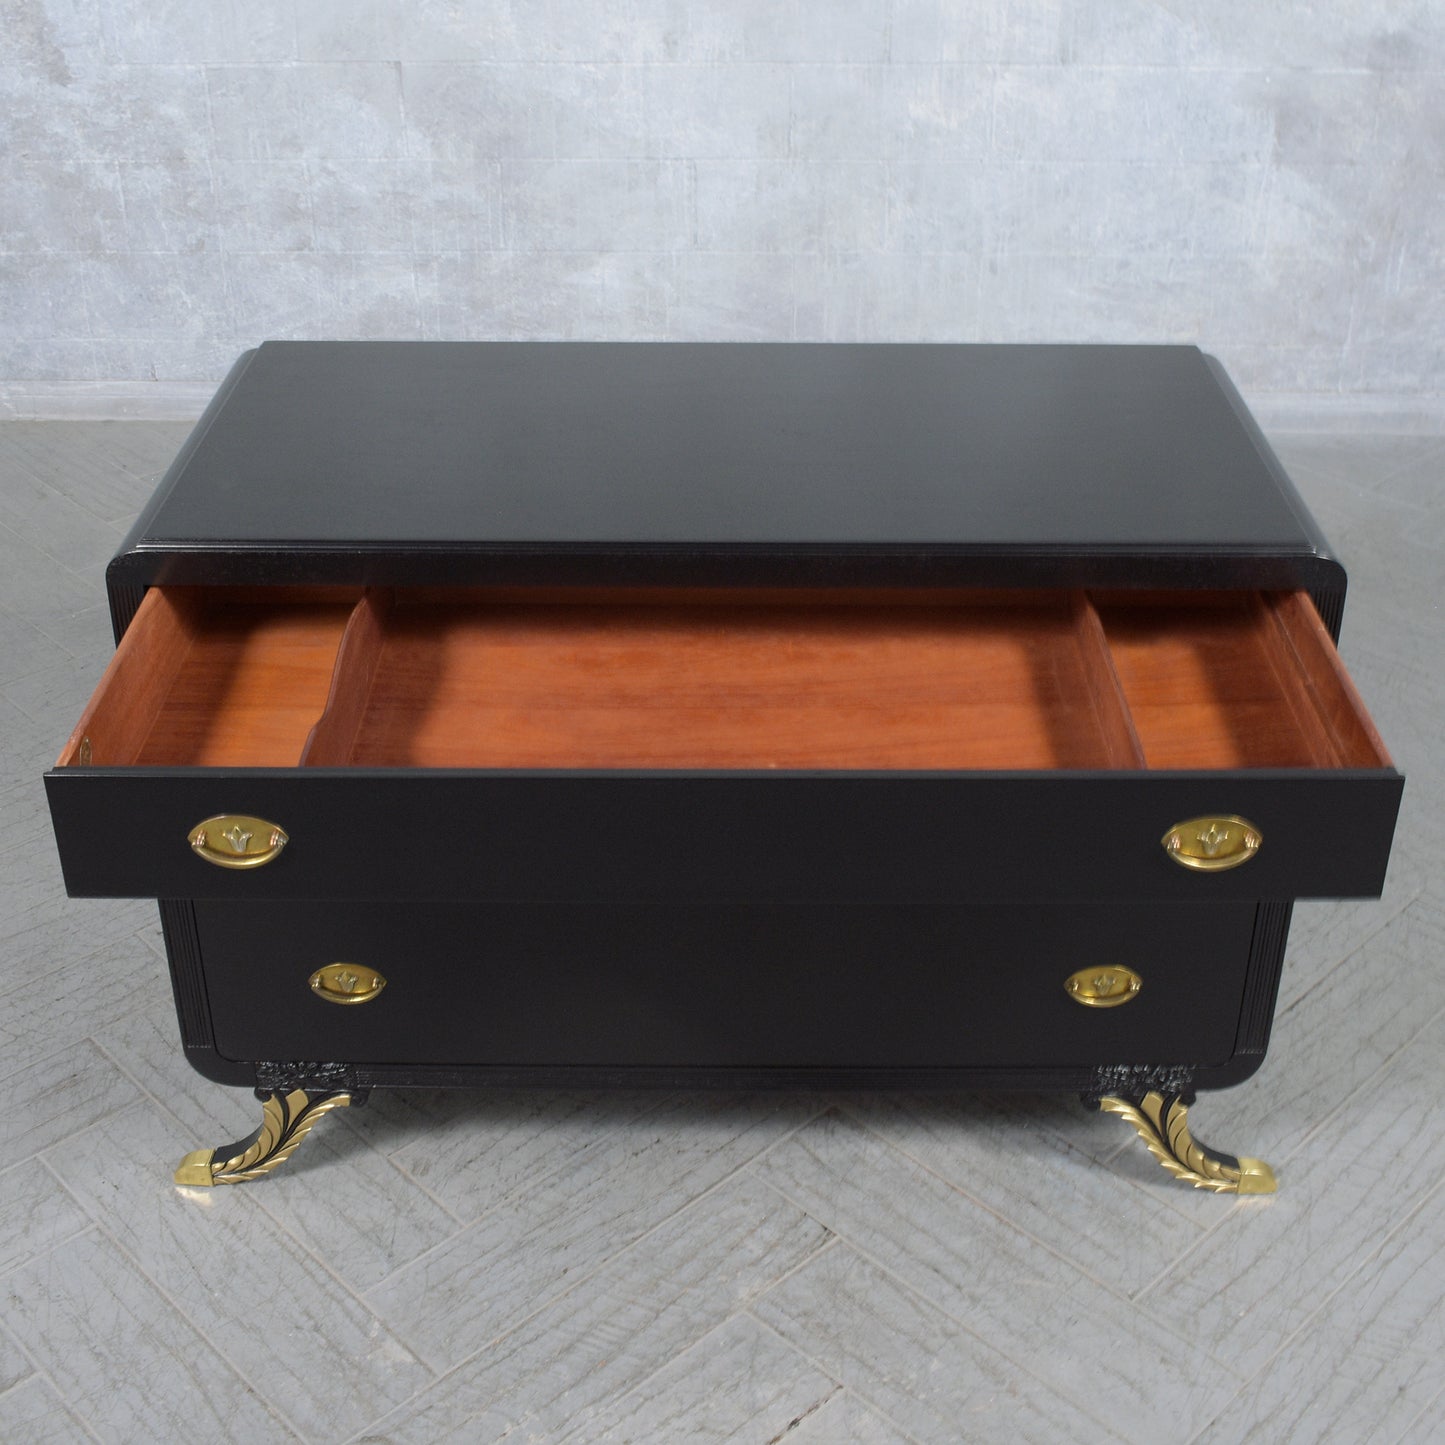 Antique Empire Ebonized Dresser: Timeless Craftsmanship Meets Modern Elegance